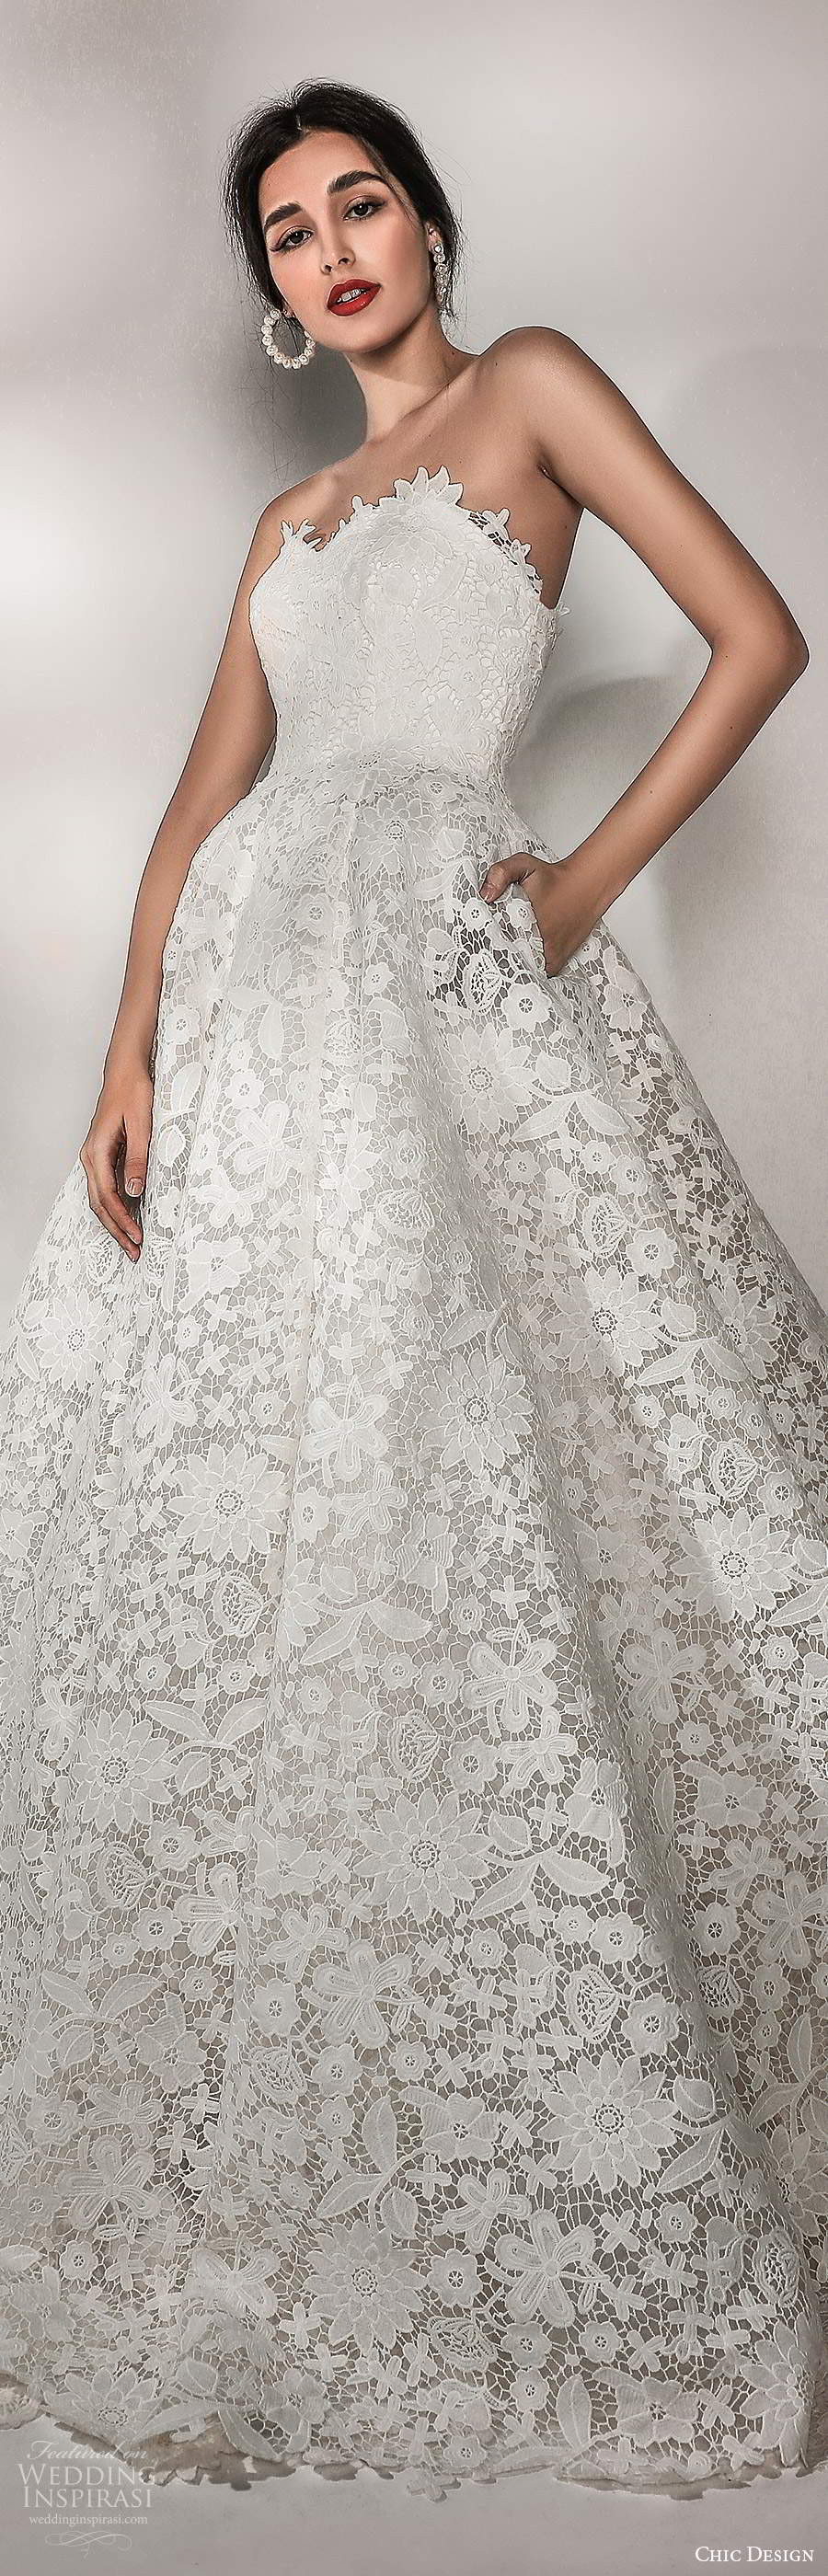 chic design 2020 bridal strapless sweetheart neckline embellished a line ball gown wedding dress chapel train pockets (2) lv